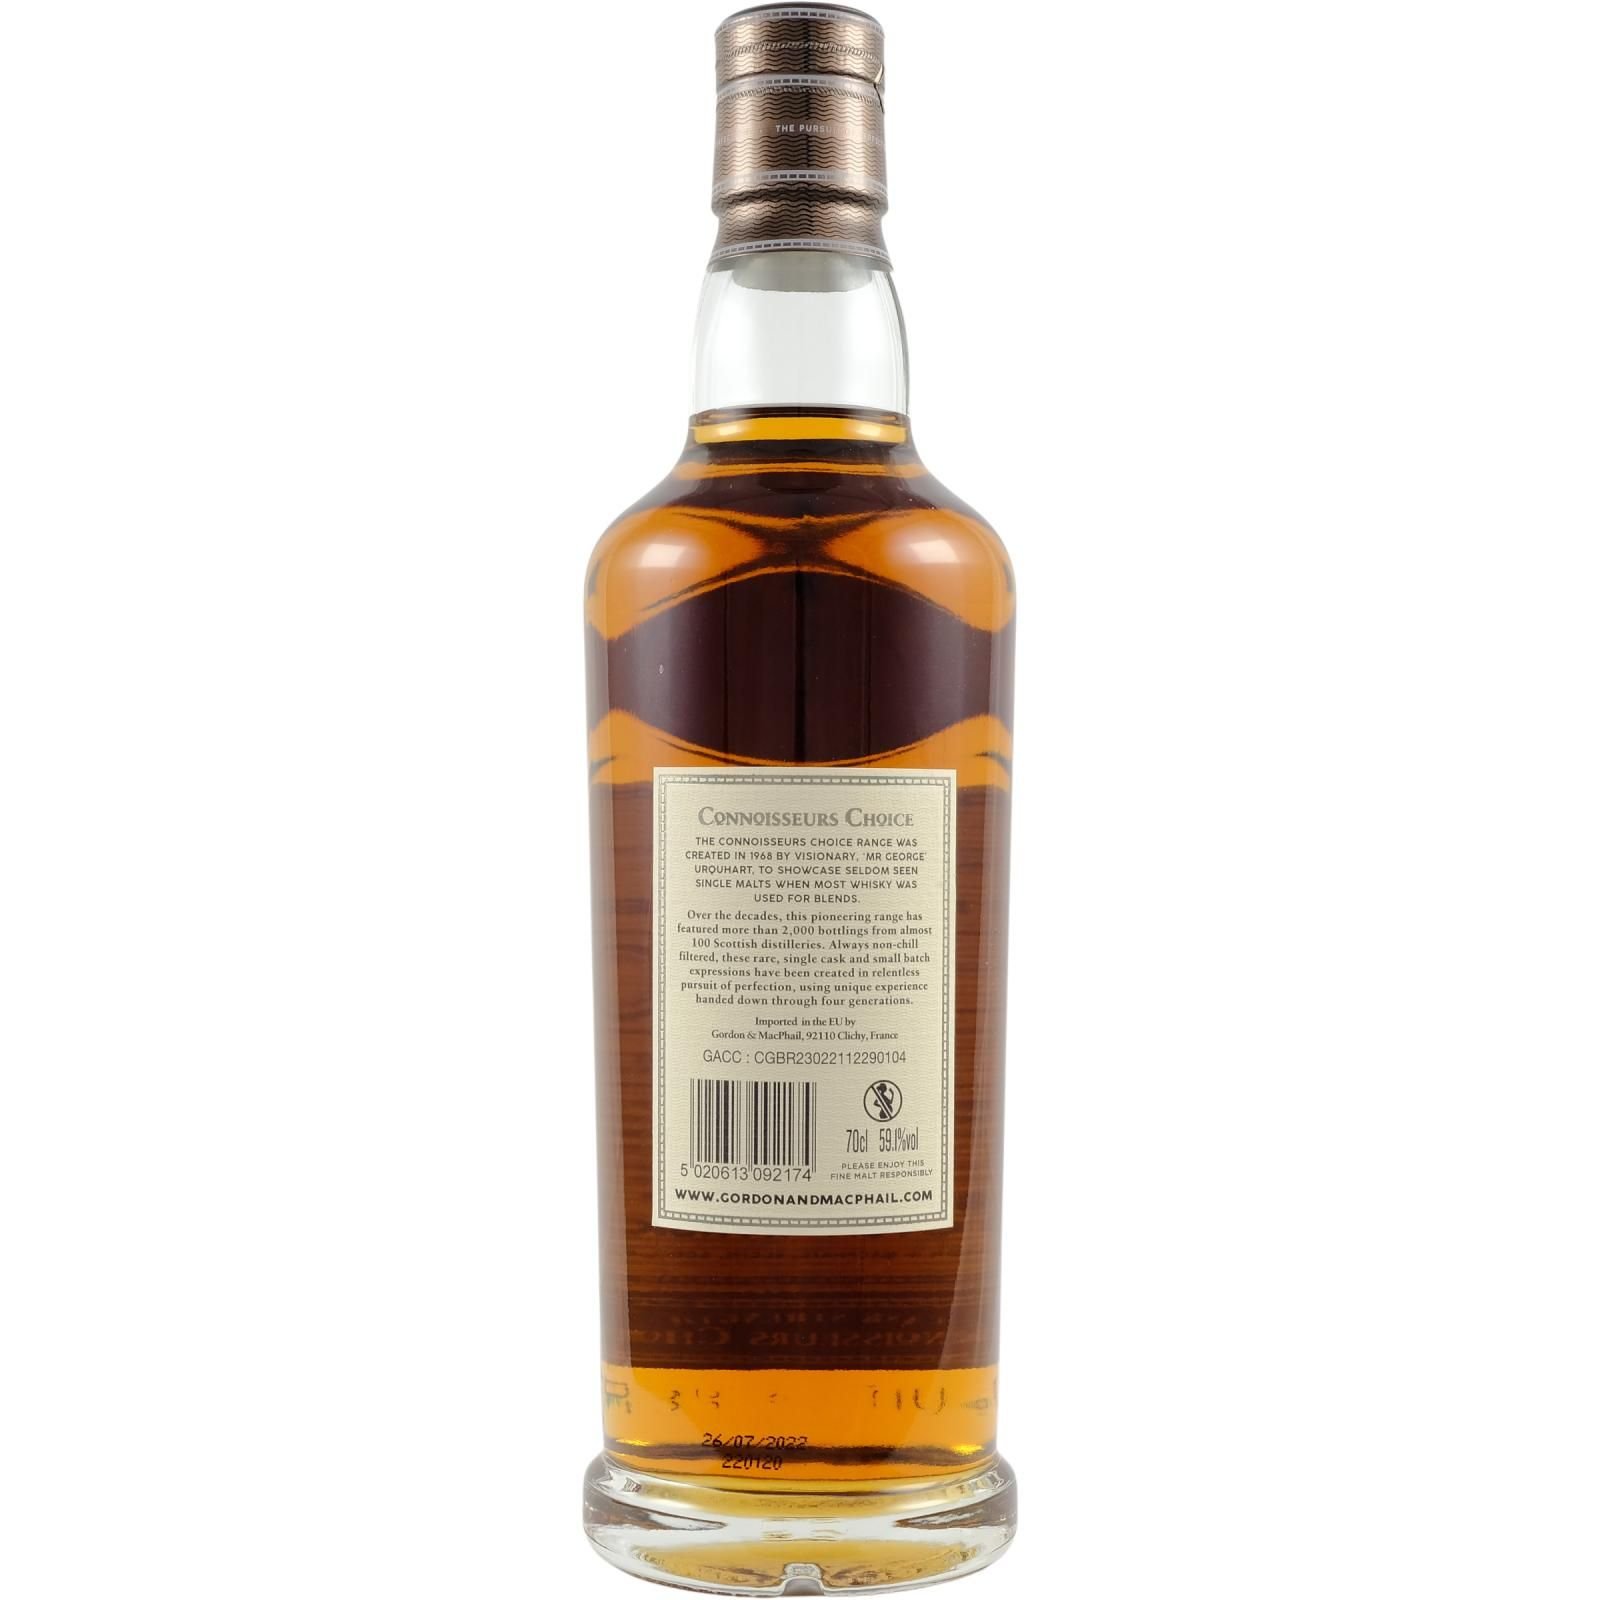 Виски Gordon & MacPhail Tormore Connoisseurs Choice 2000 Single Malt Scotch Whisky 59.1% 0.7 л, в подарочной упаковке - фото 3